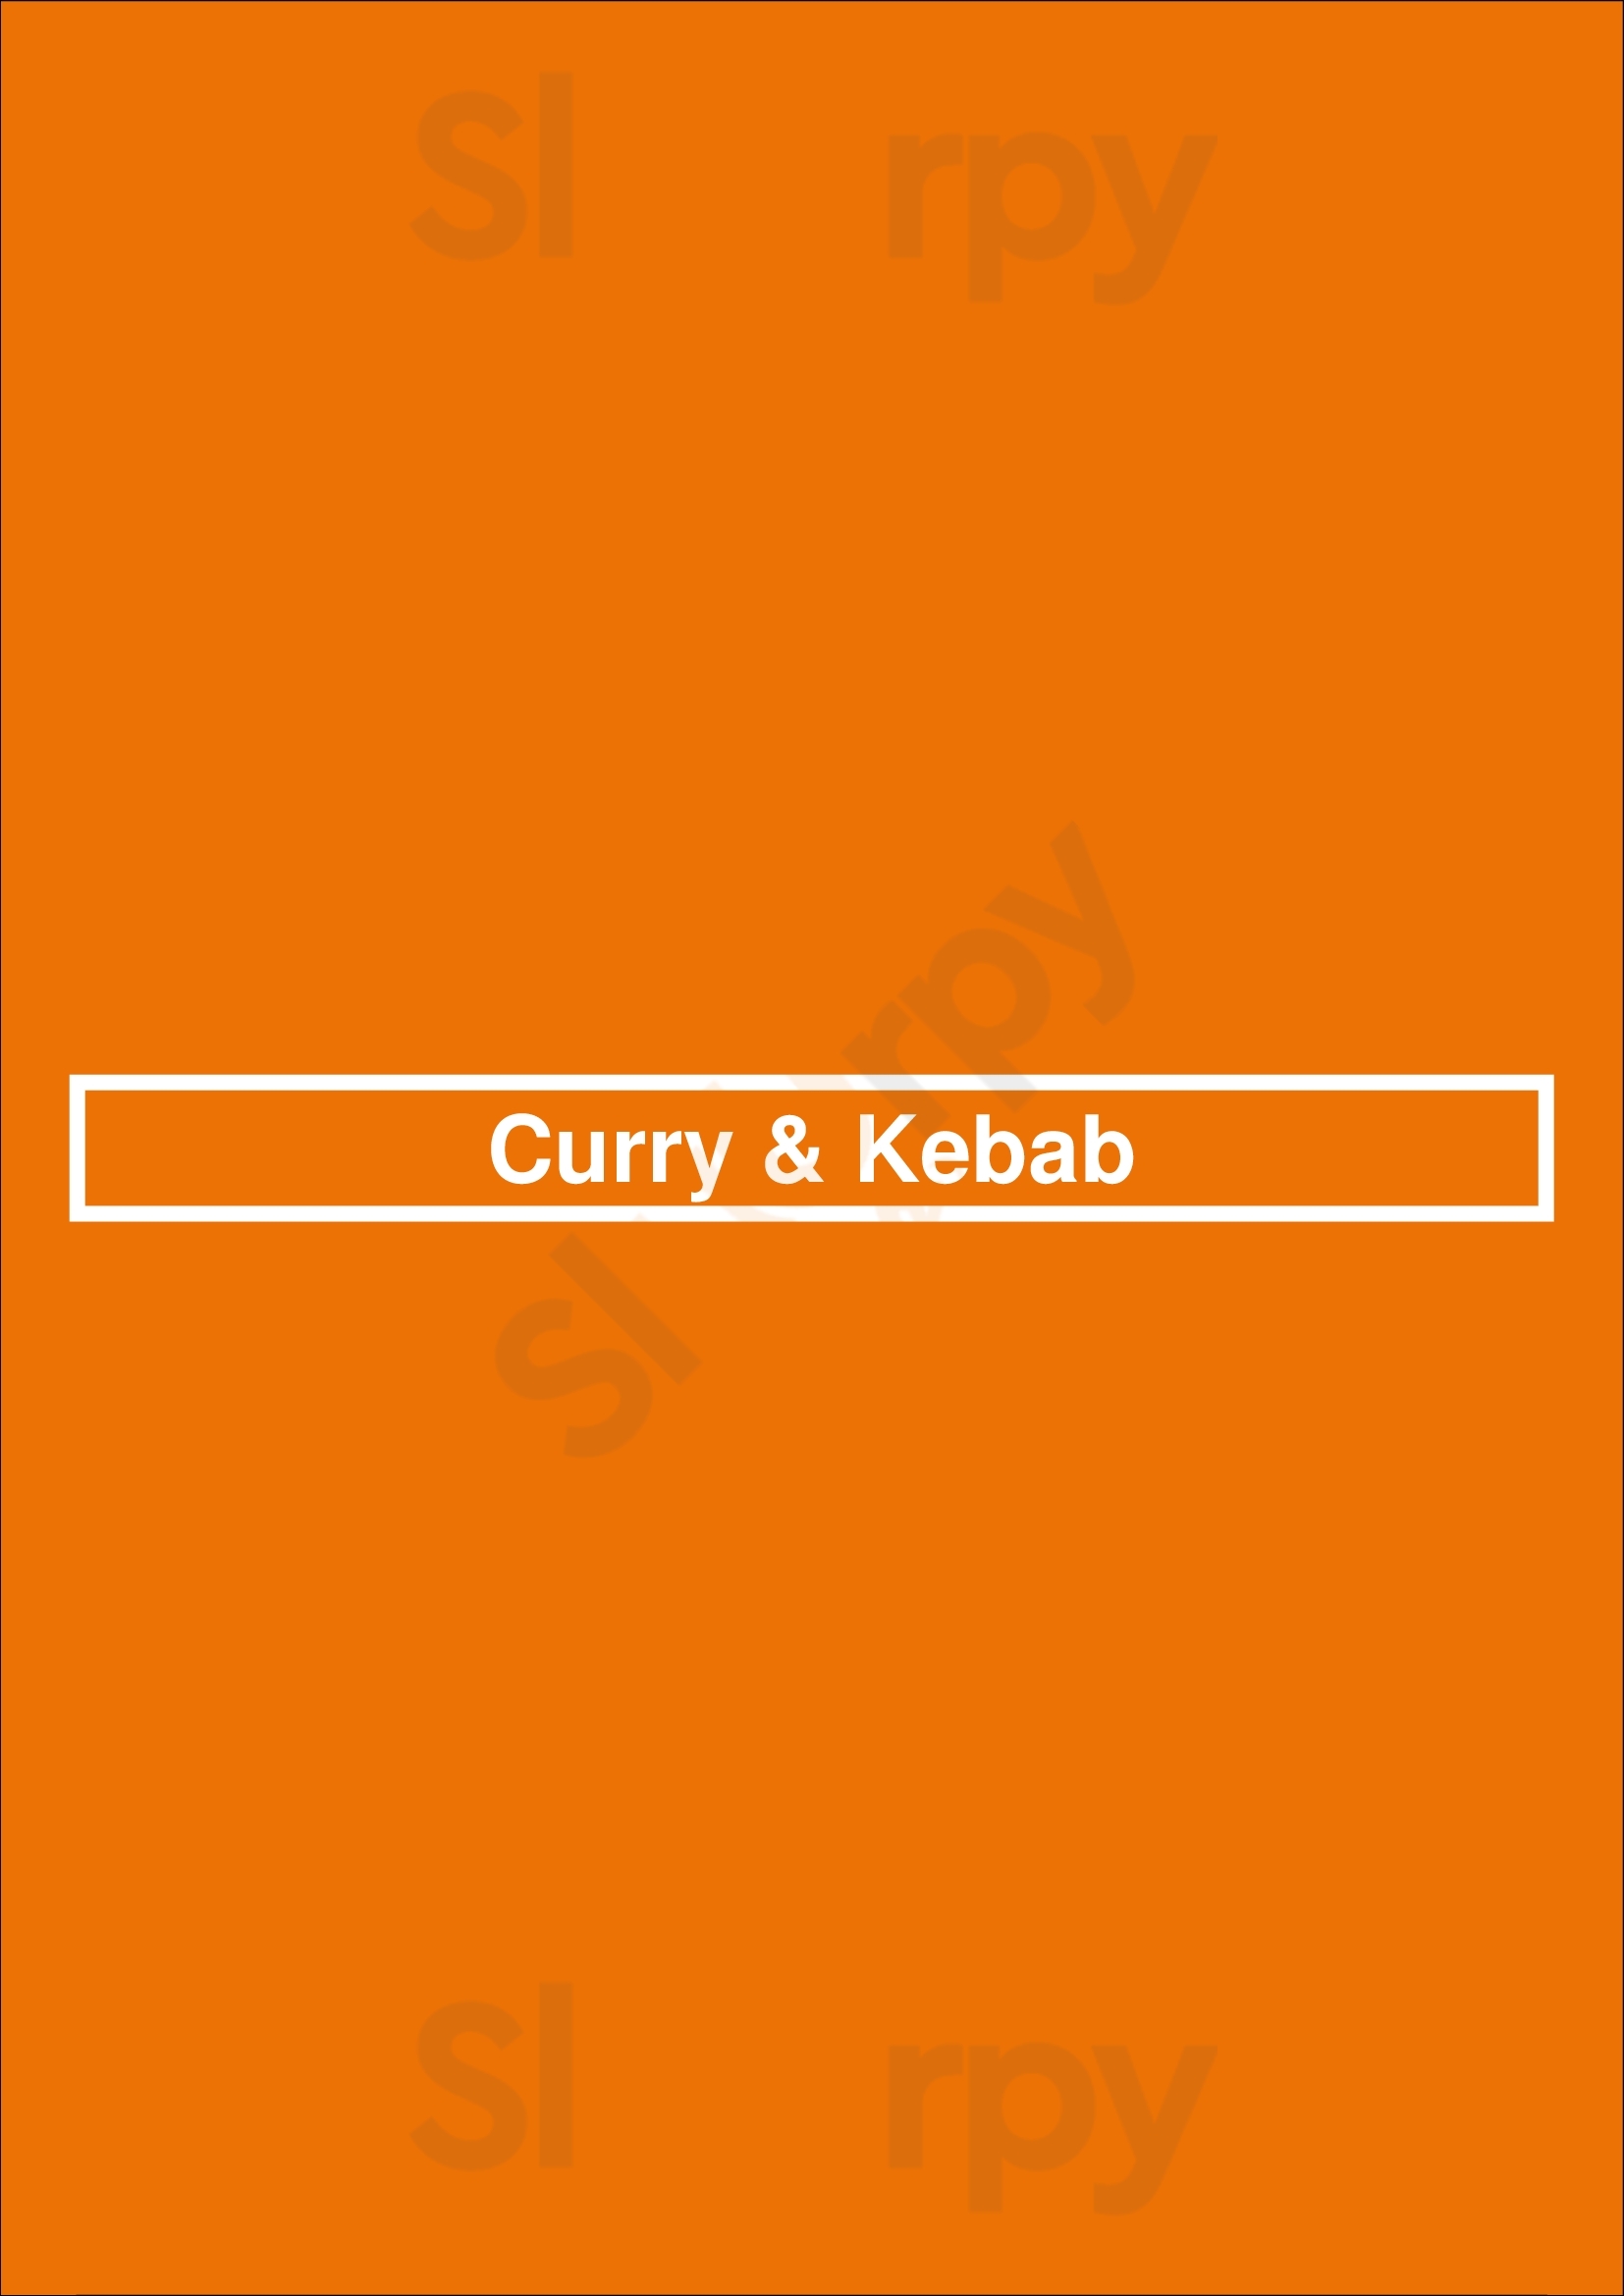 Curry & Kebab Bronx Menu - 1